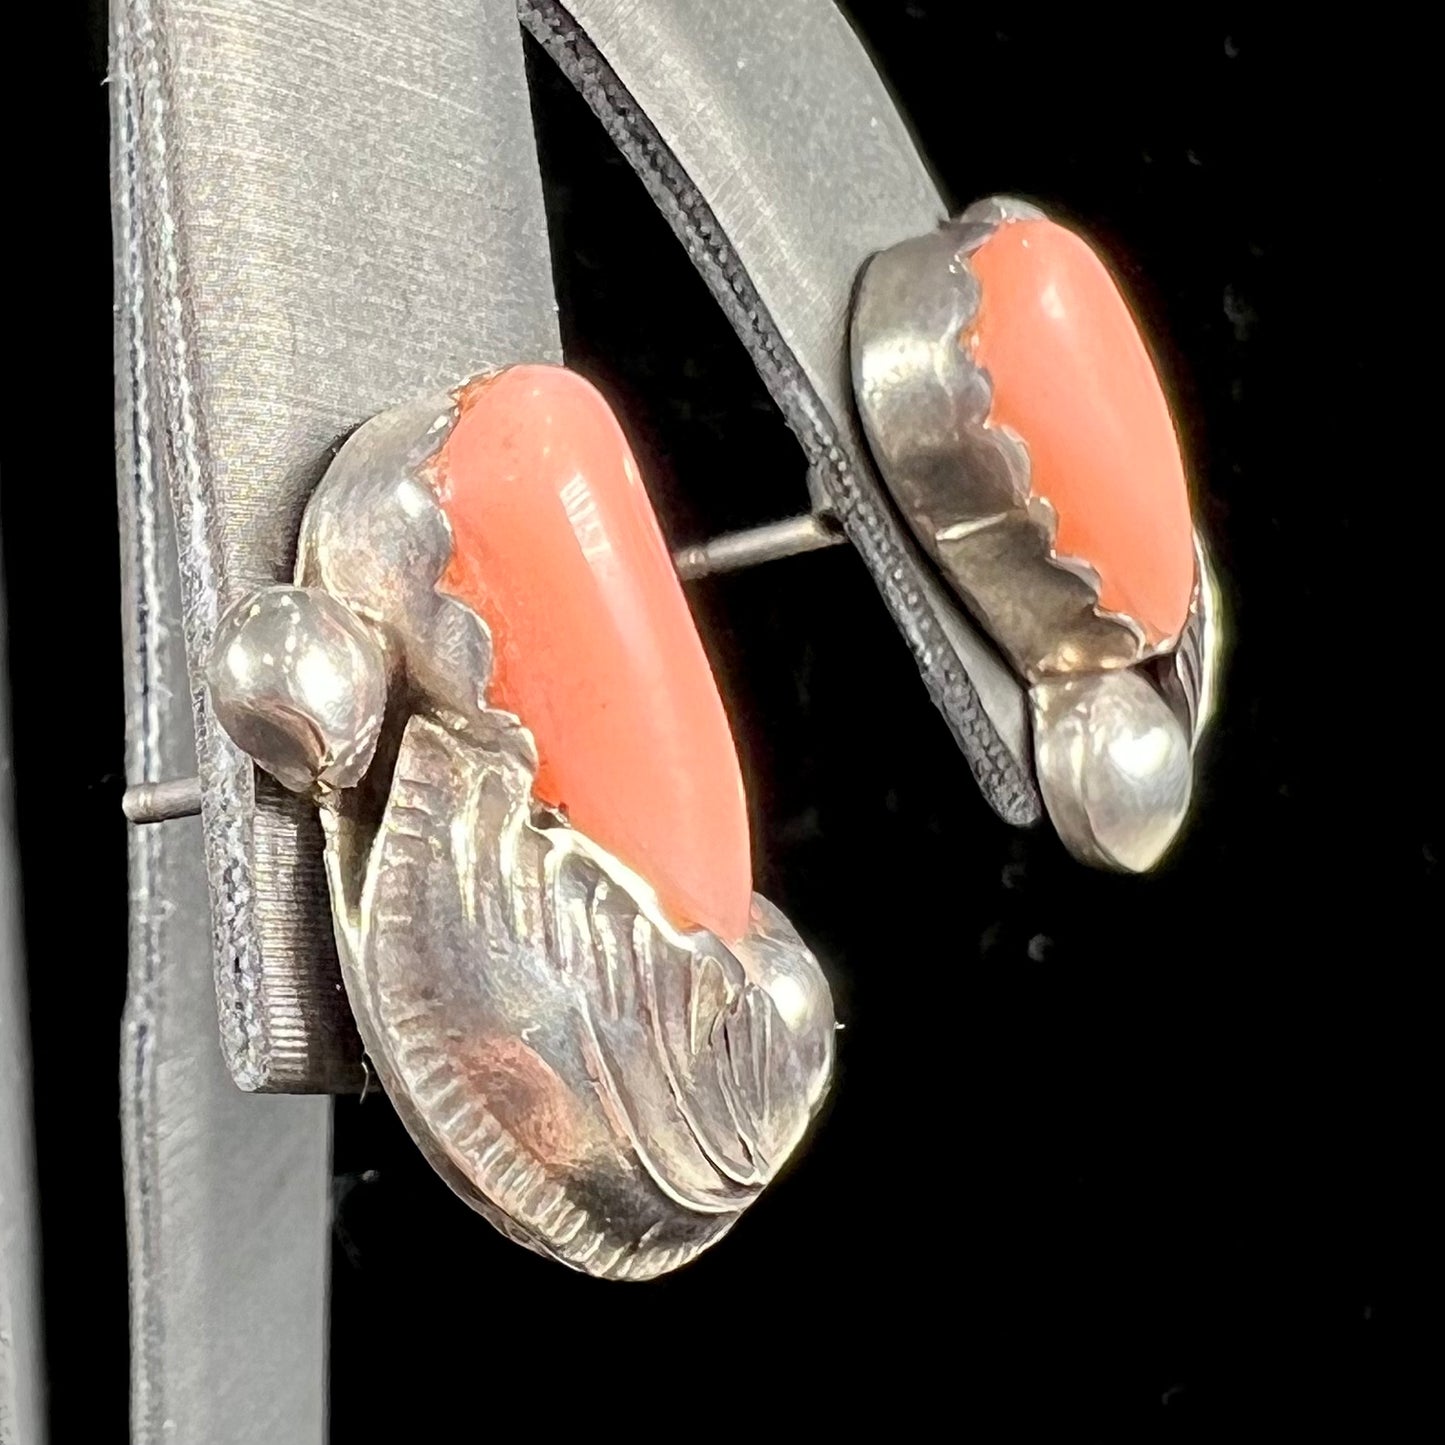 A pair of sterling silver coral earrings handmade by Zuni artists, Carmelita and Dan Simplicio.